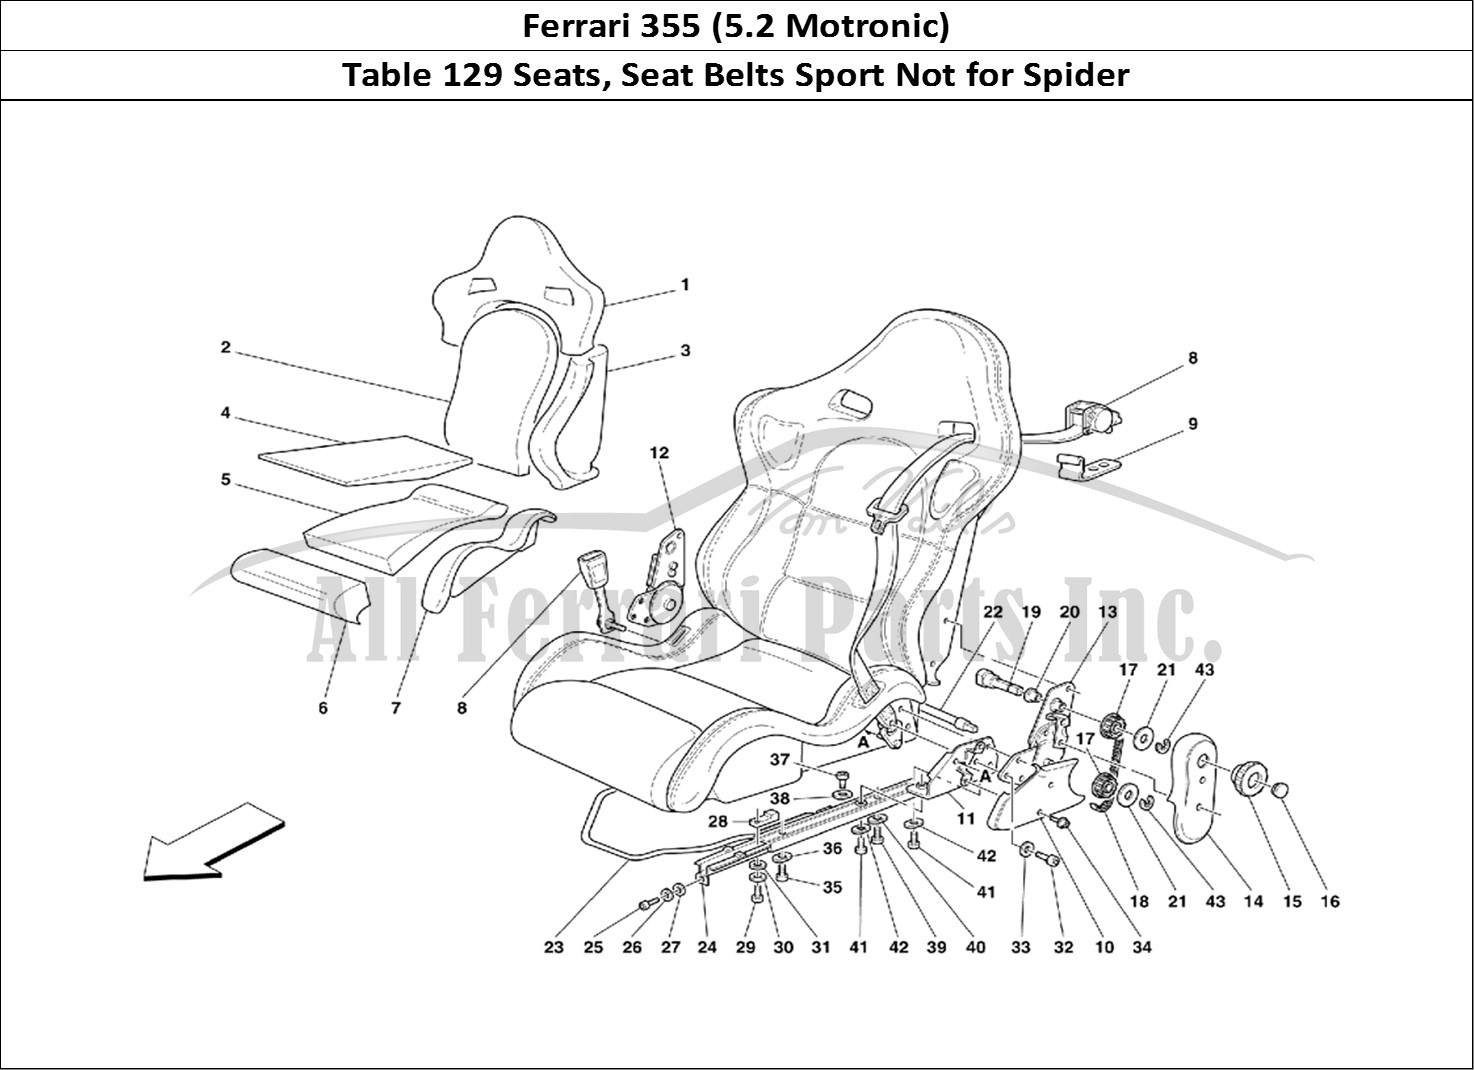 Ferrari Parts Ferrari 355 (5.2 Motronic) Page 129 Seats and Safety Belts -S